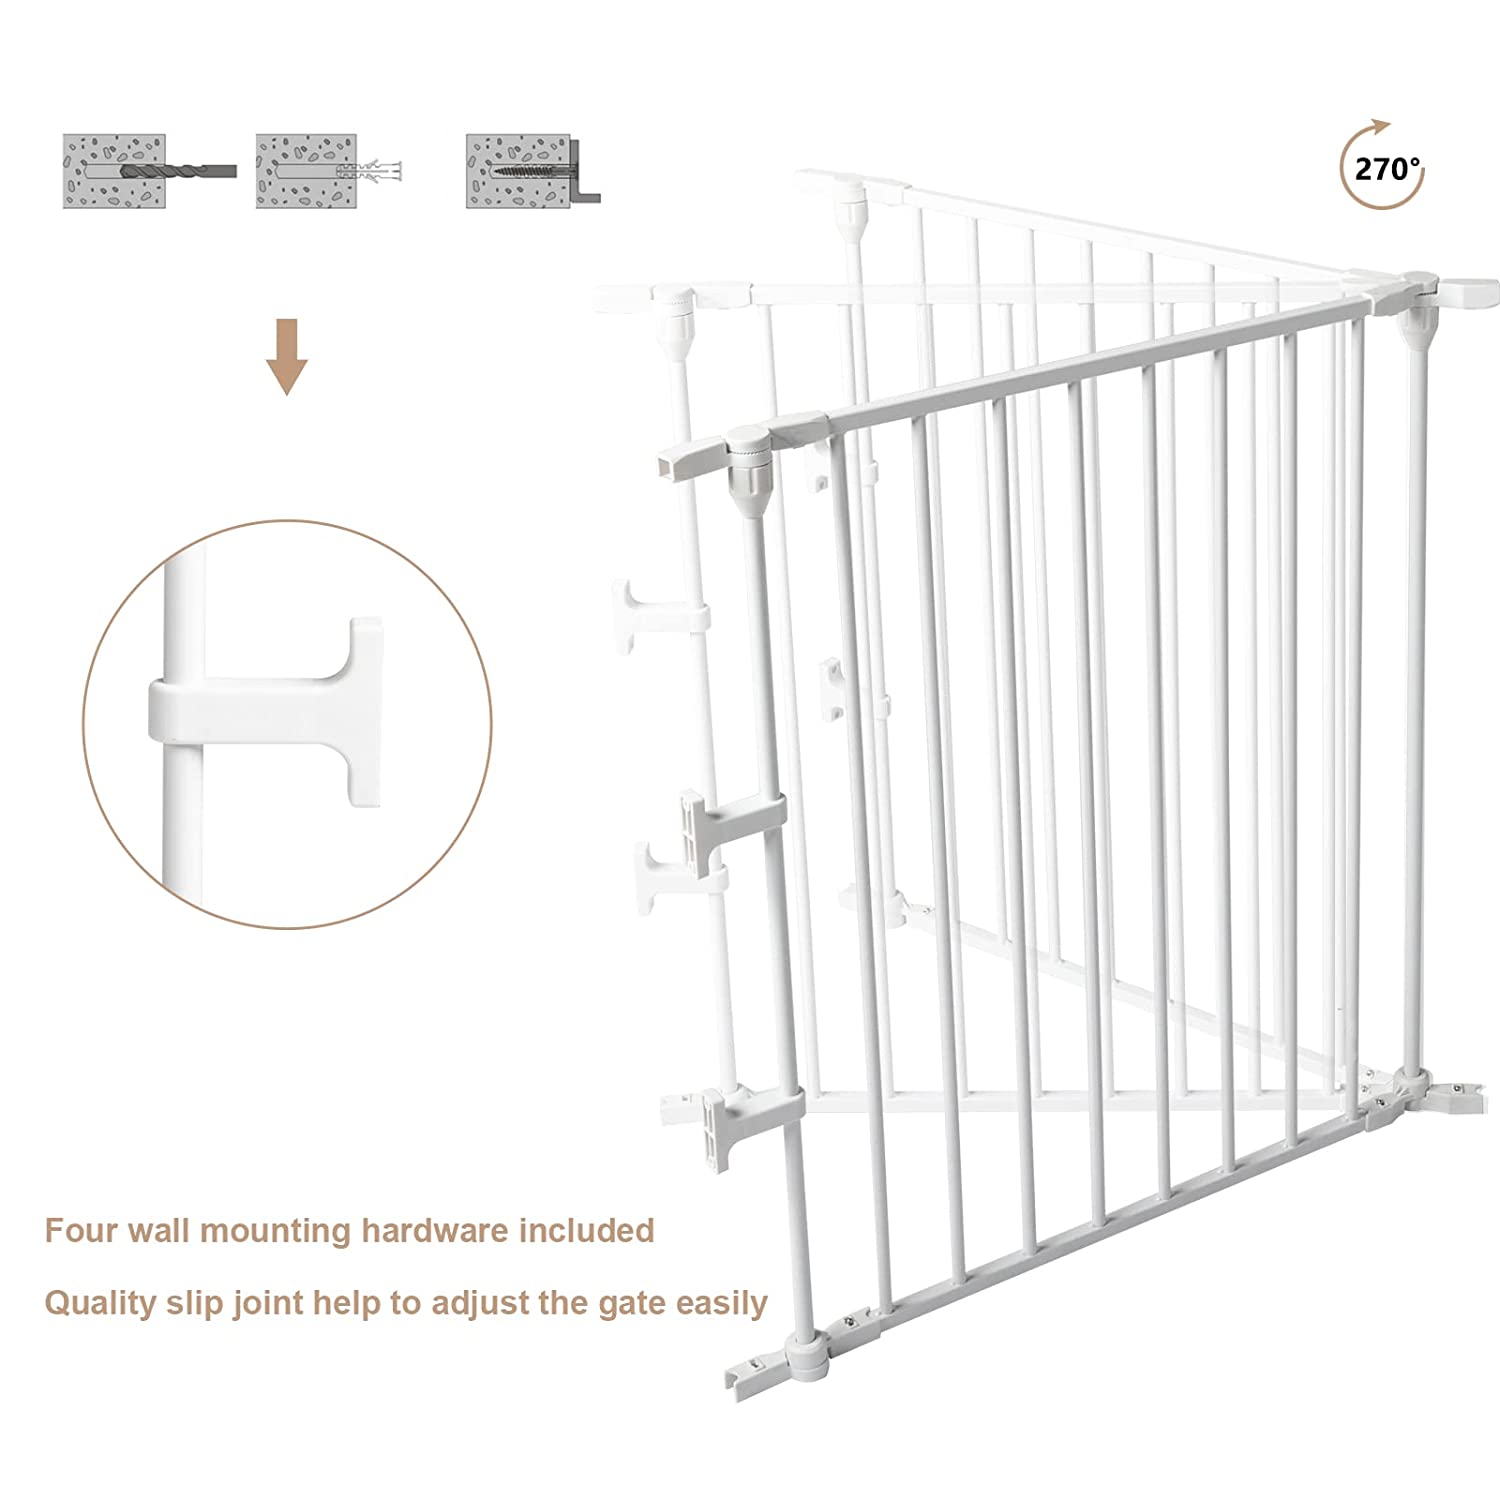 74-Inch Versatile Safety Gate Metal Baby Pet Gate Configurable Dog Barrier - Ideal for Wide Door Openings， Stairways， Doorways (25.39